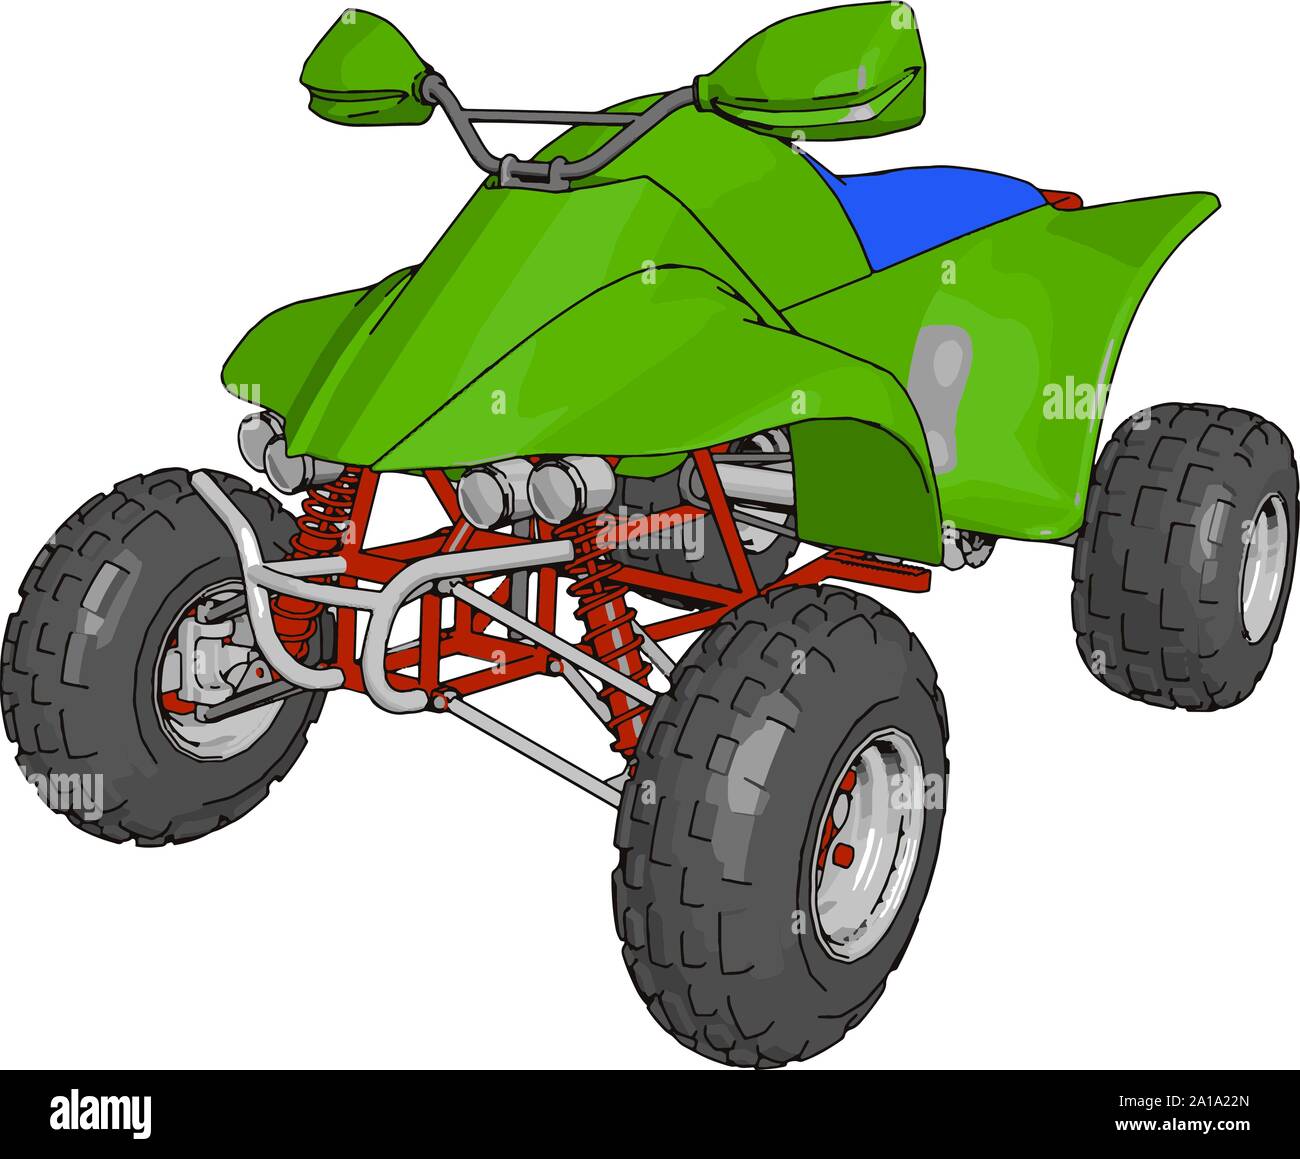 Grün quad bike, Illustration, Vektor auf weißem Hintergrund. Stock Vektor